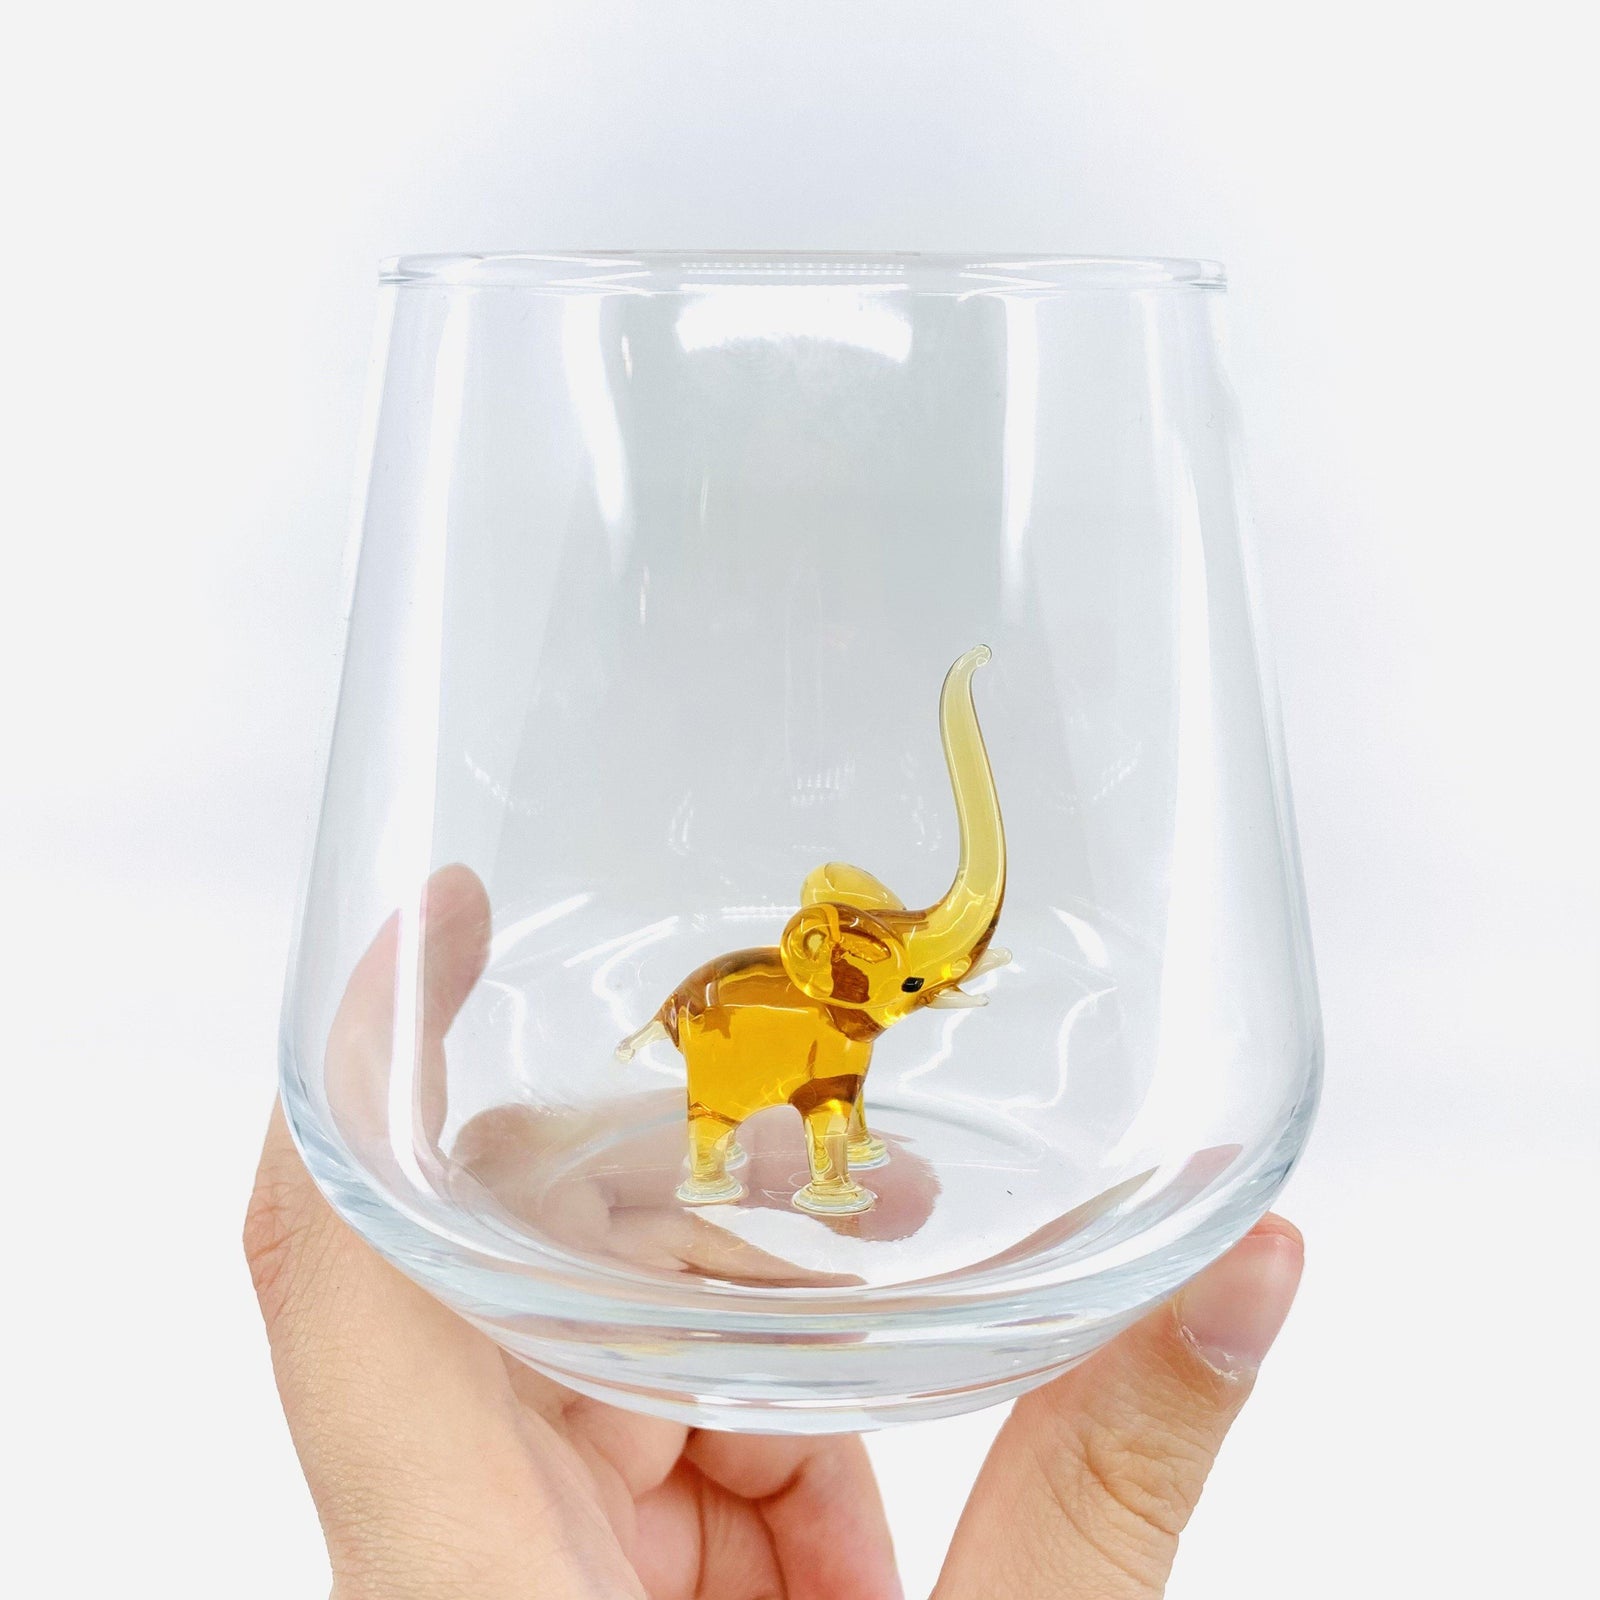 Handblown Figures Inside Drinking Glass Cup, Stemless Glass with Hidden  Animals Inside, Perfect for …See more Handblown Figures Inside Drinking  Glass